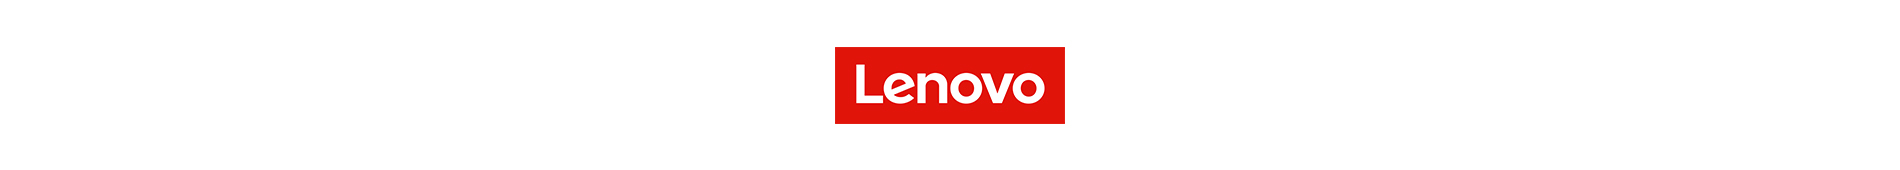 Lenovo General Btm Banner  Banner 01